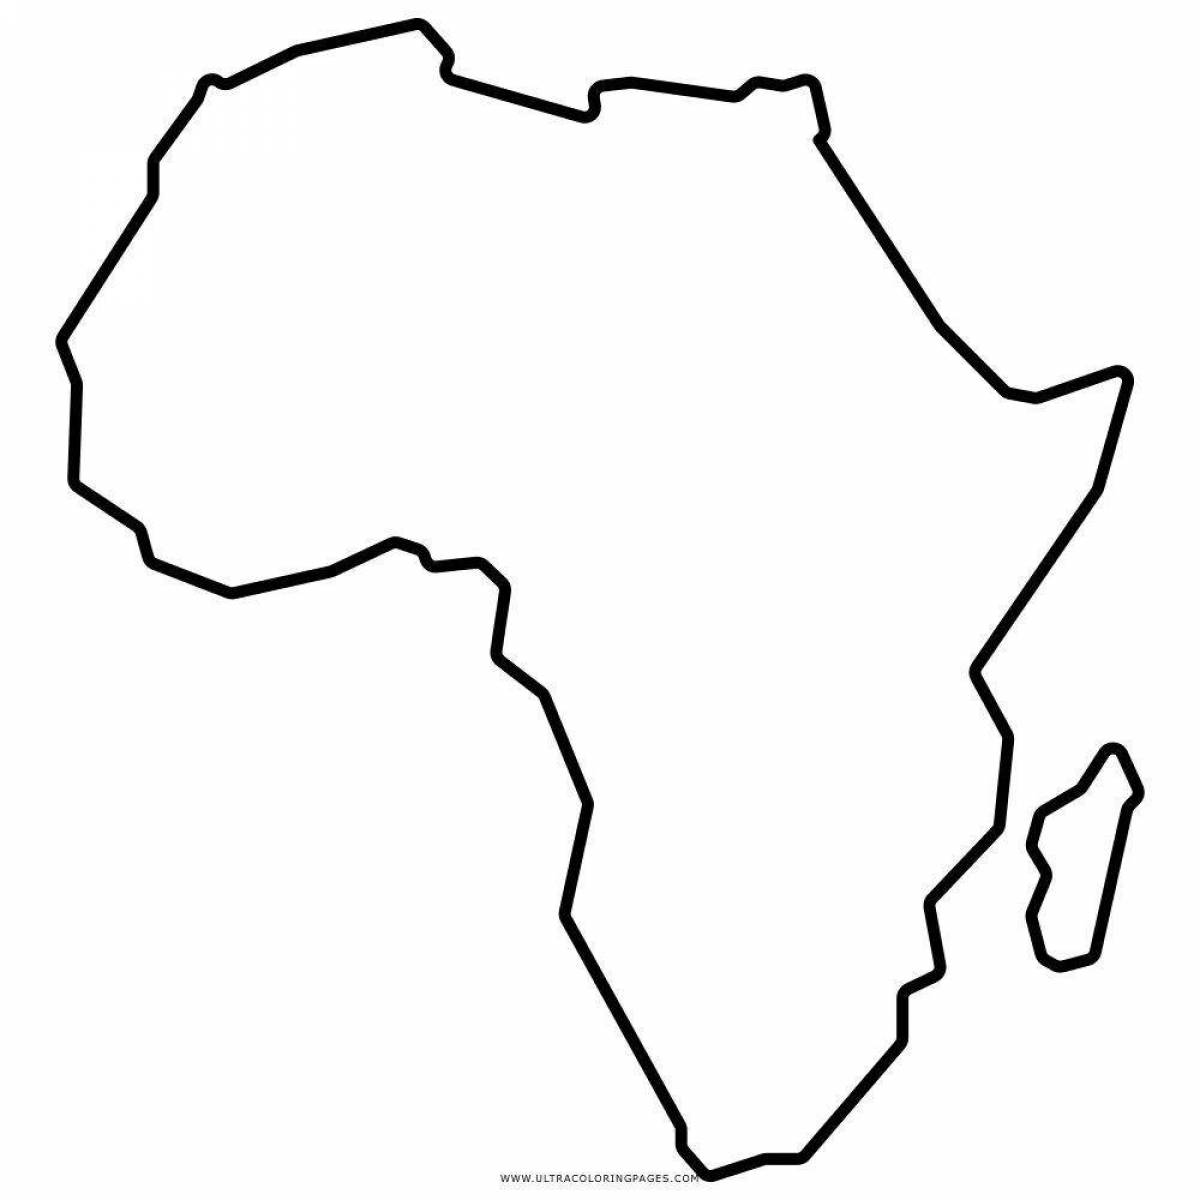 Контур континента Африка